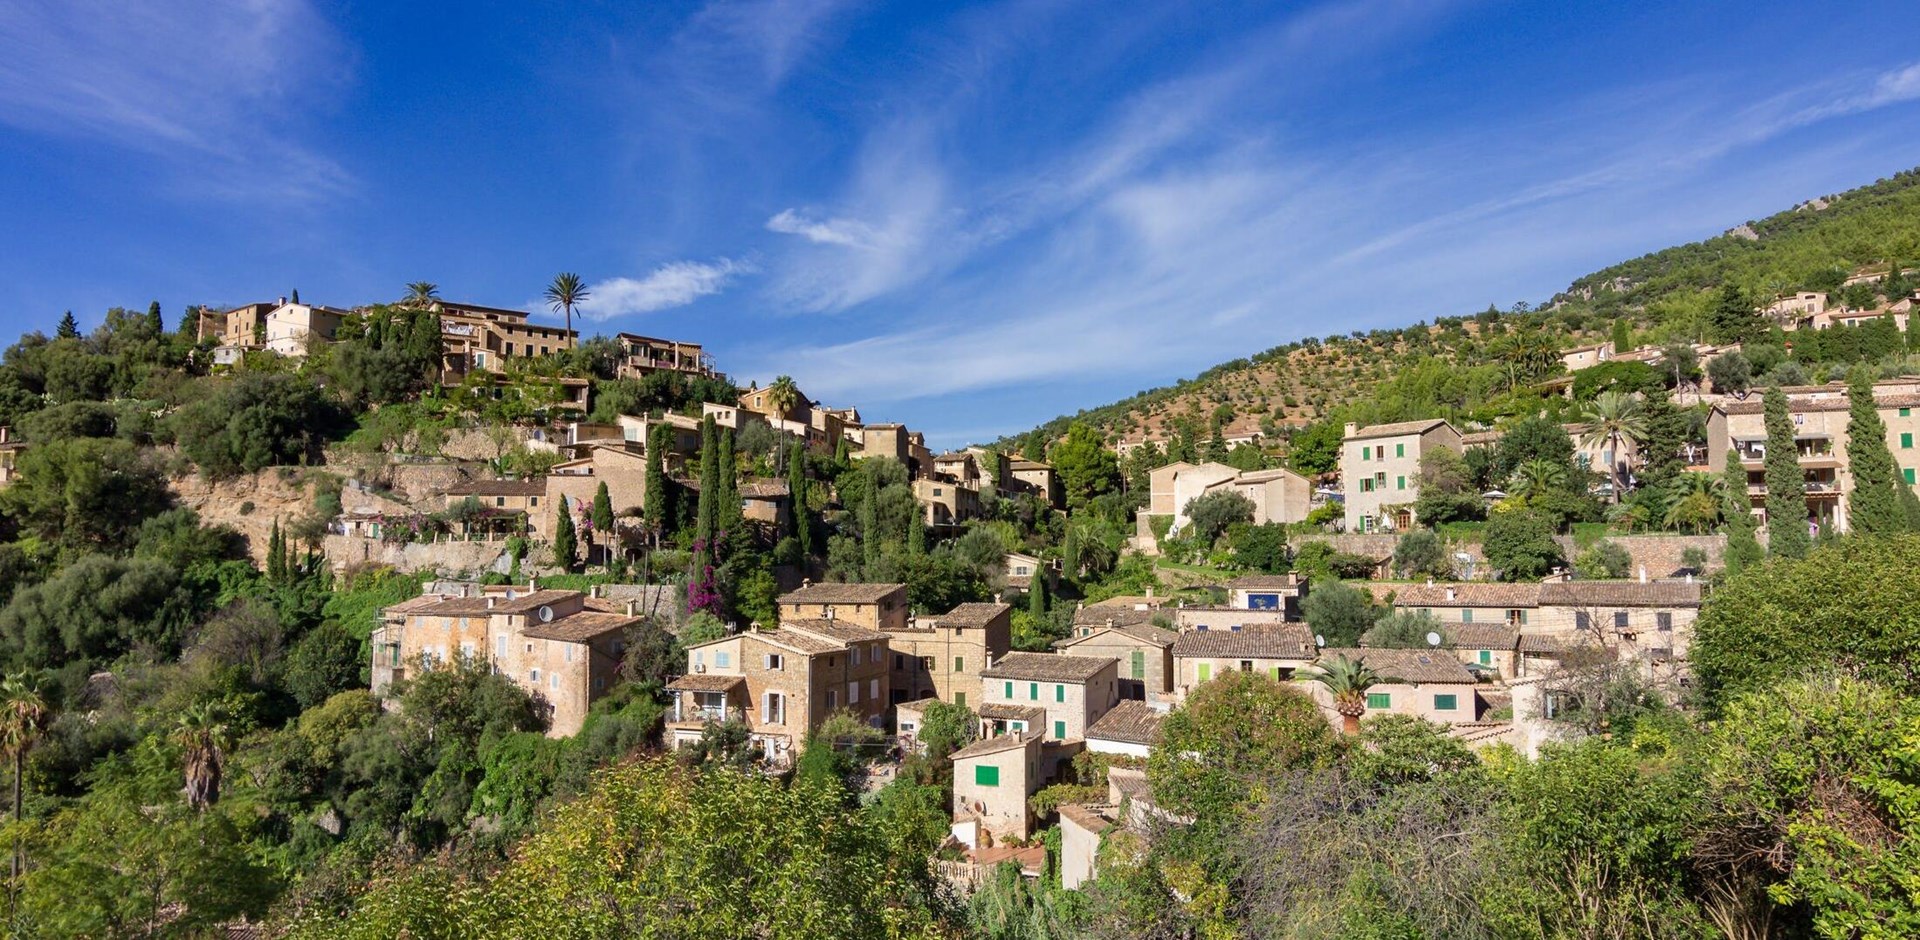 View of Deya town in Mallorca Island (Spain)